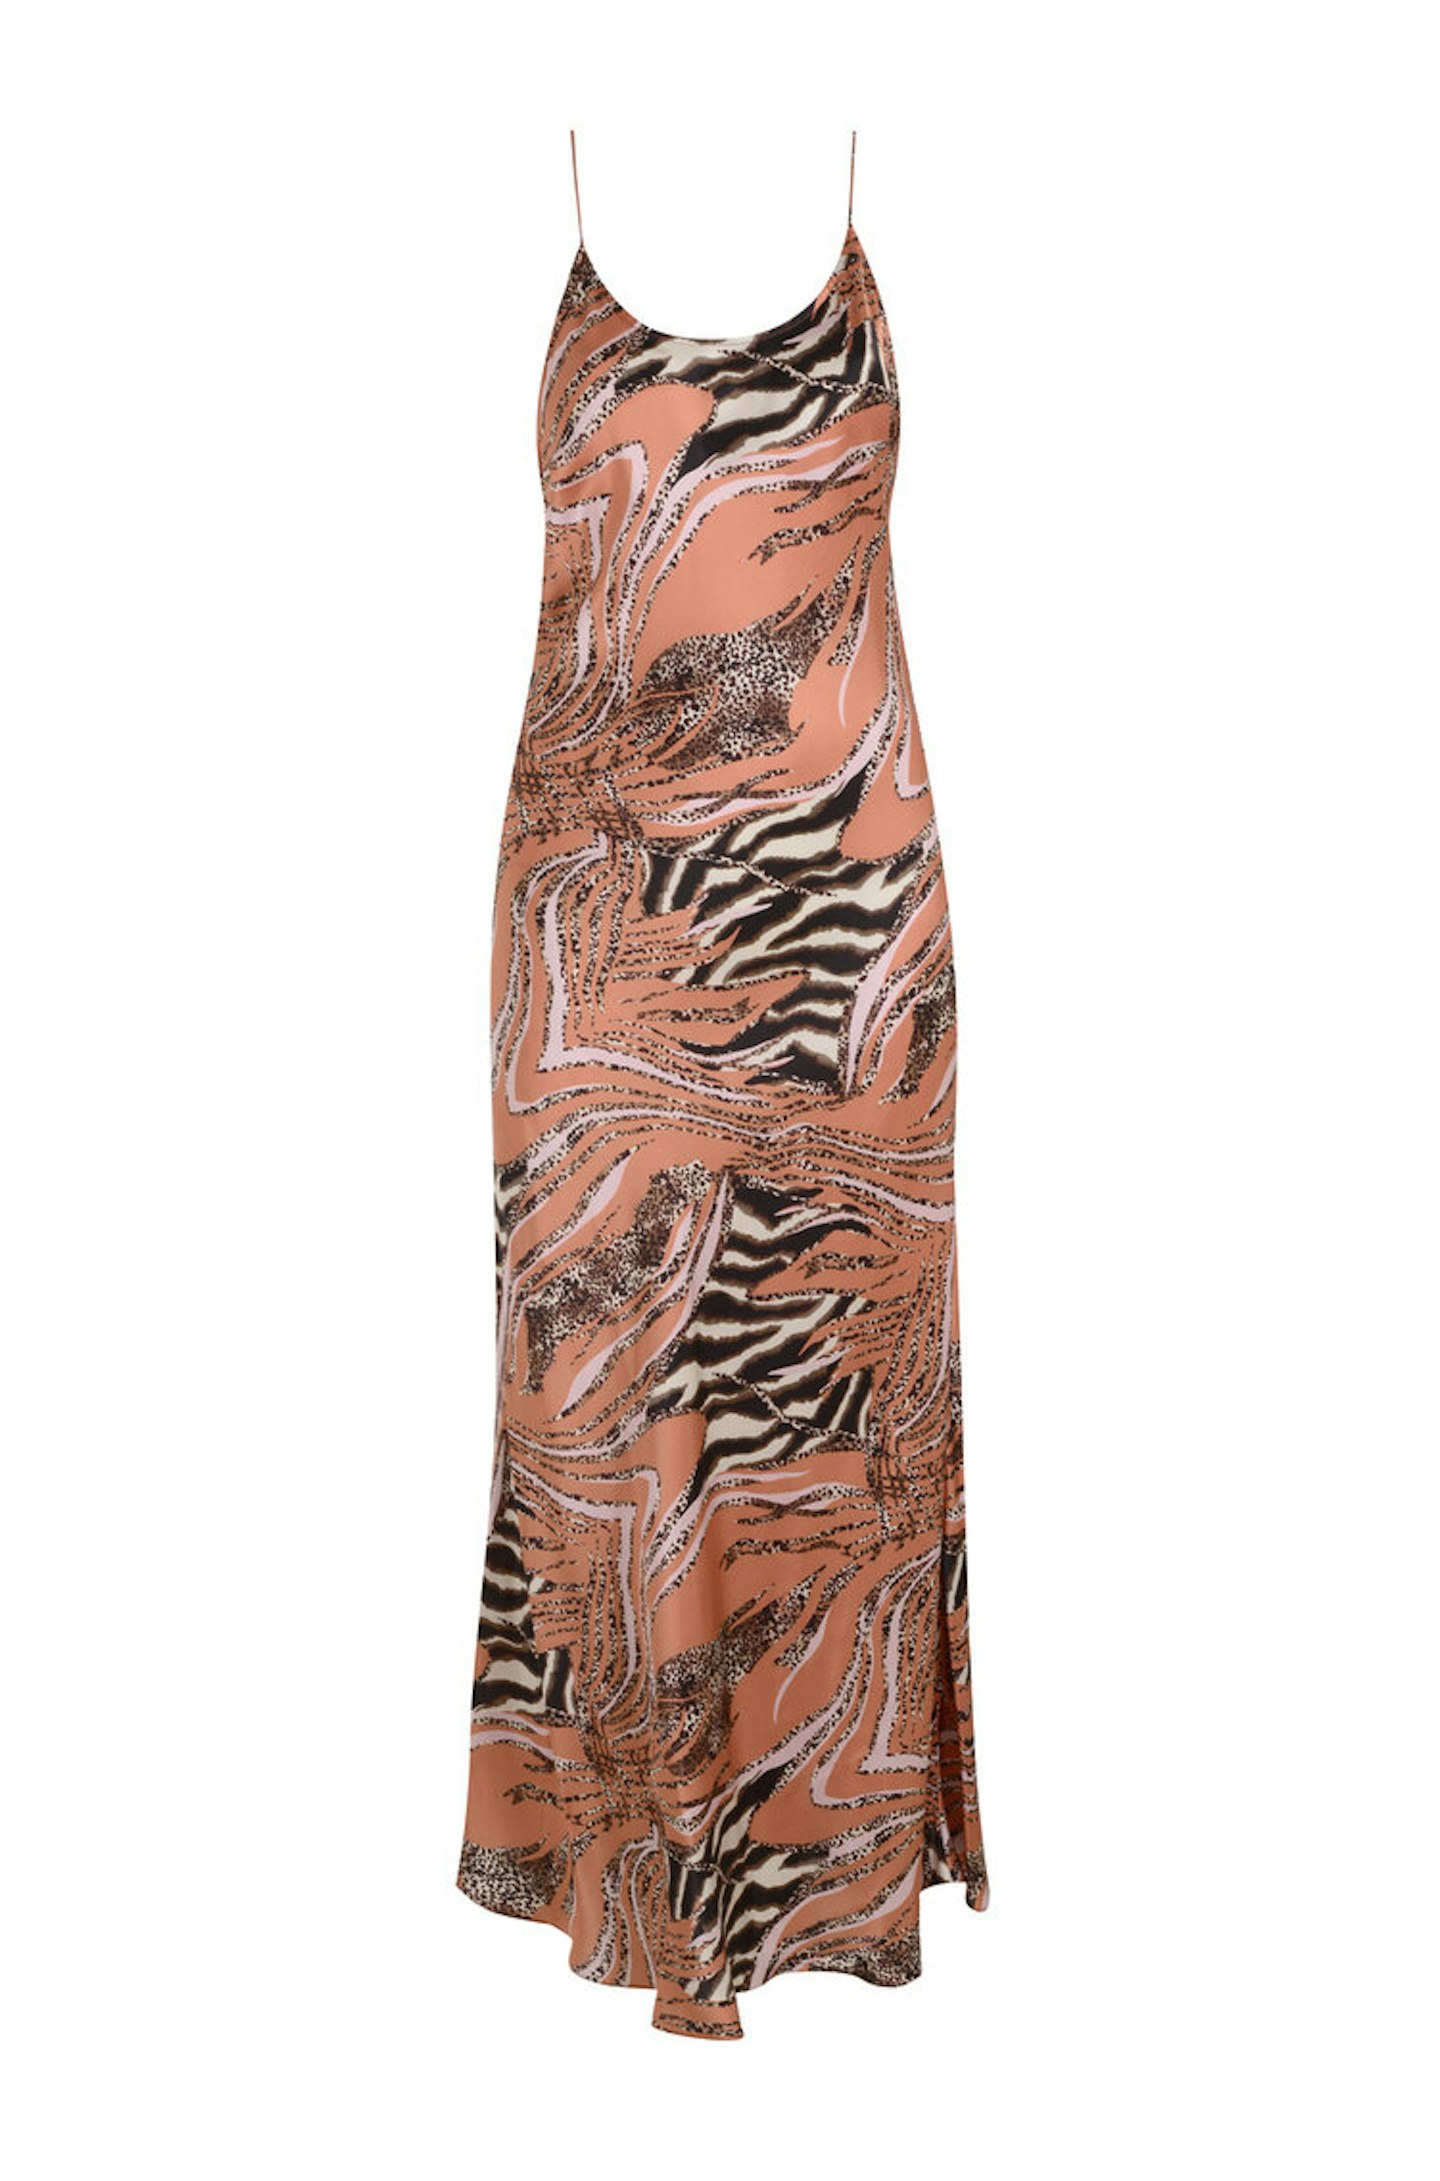 Monika The Label, Camille Animal Print Slip Dress, £270